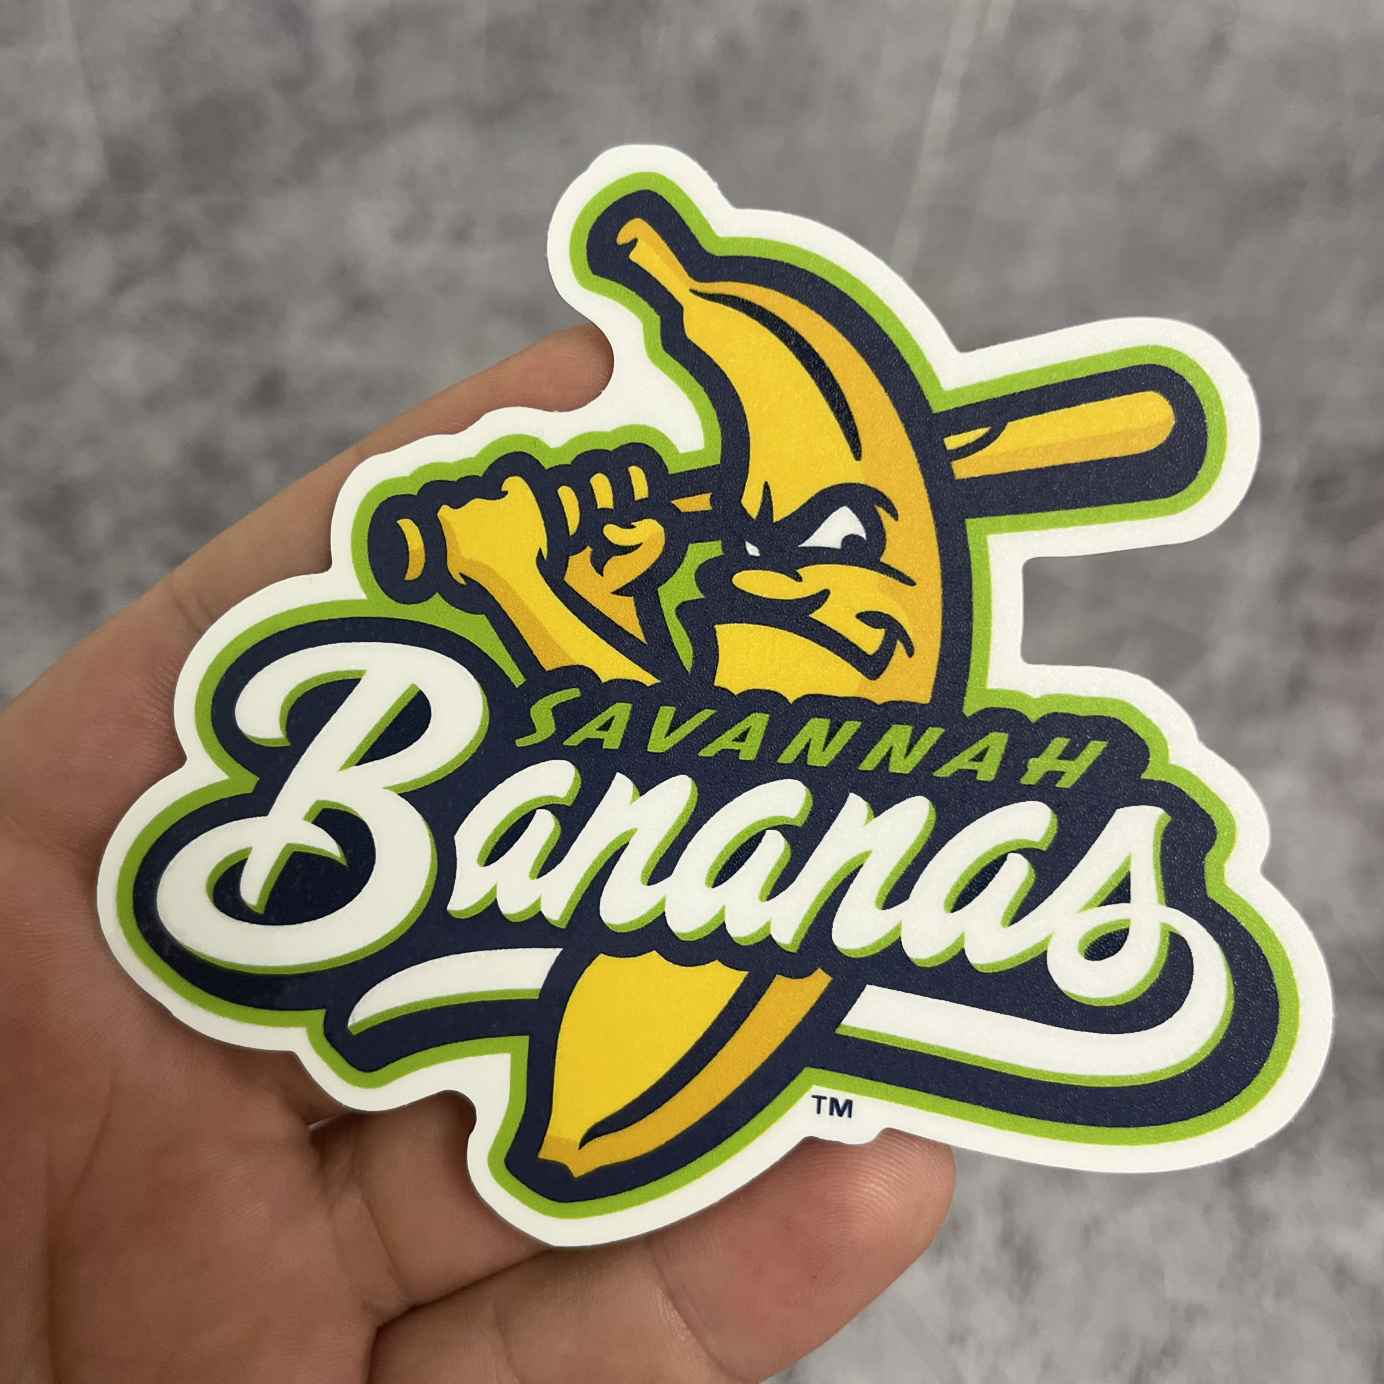 Savanna Bananas sticker